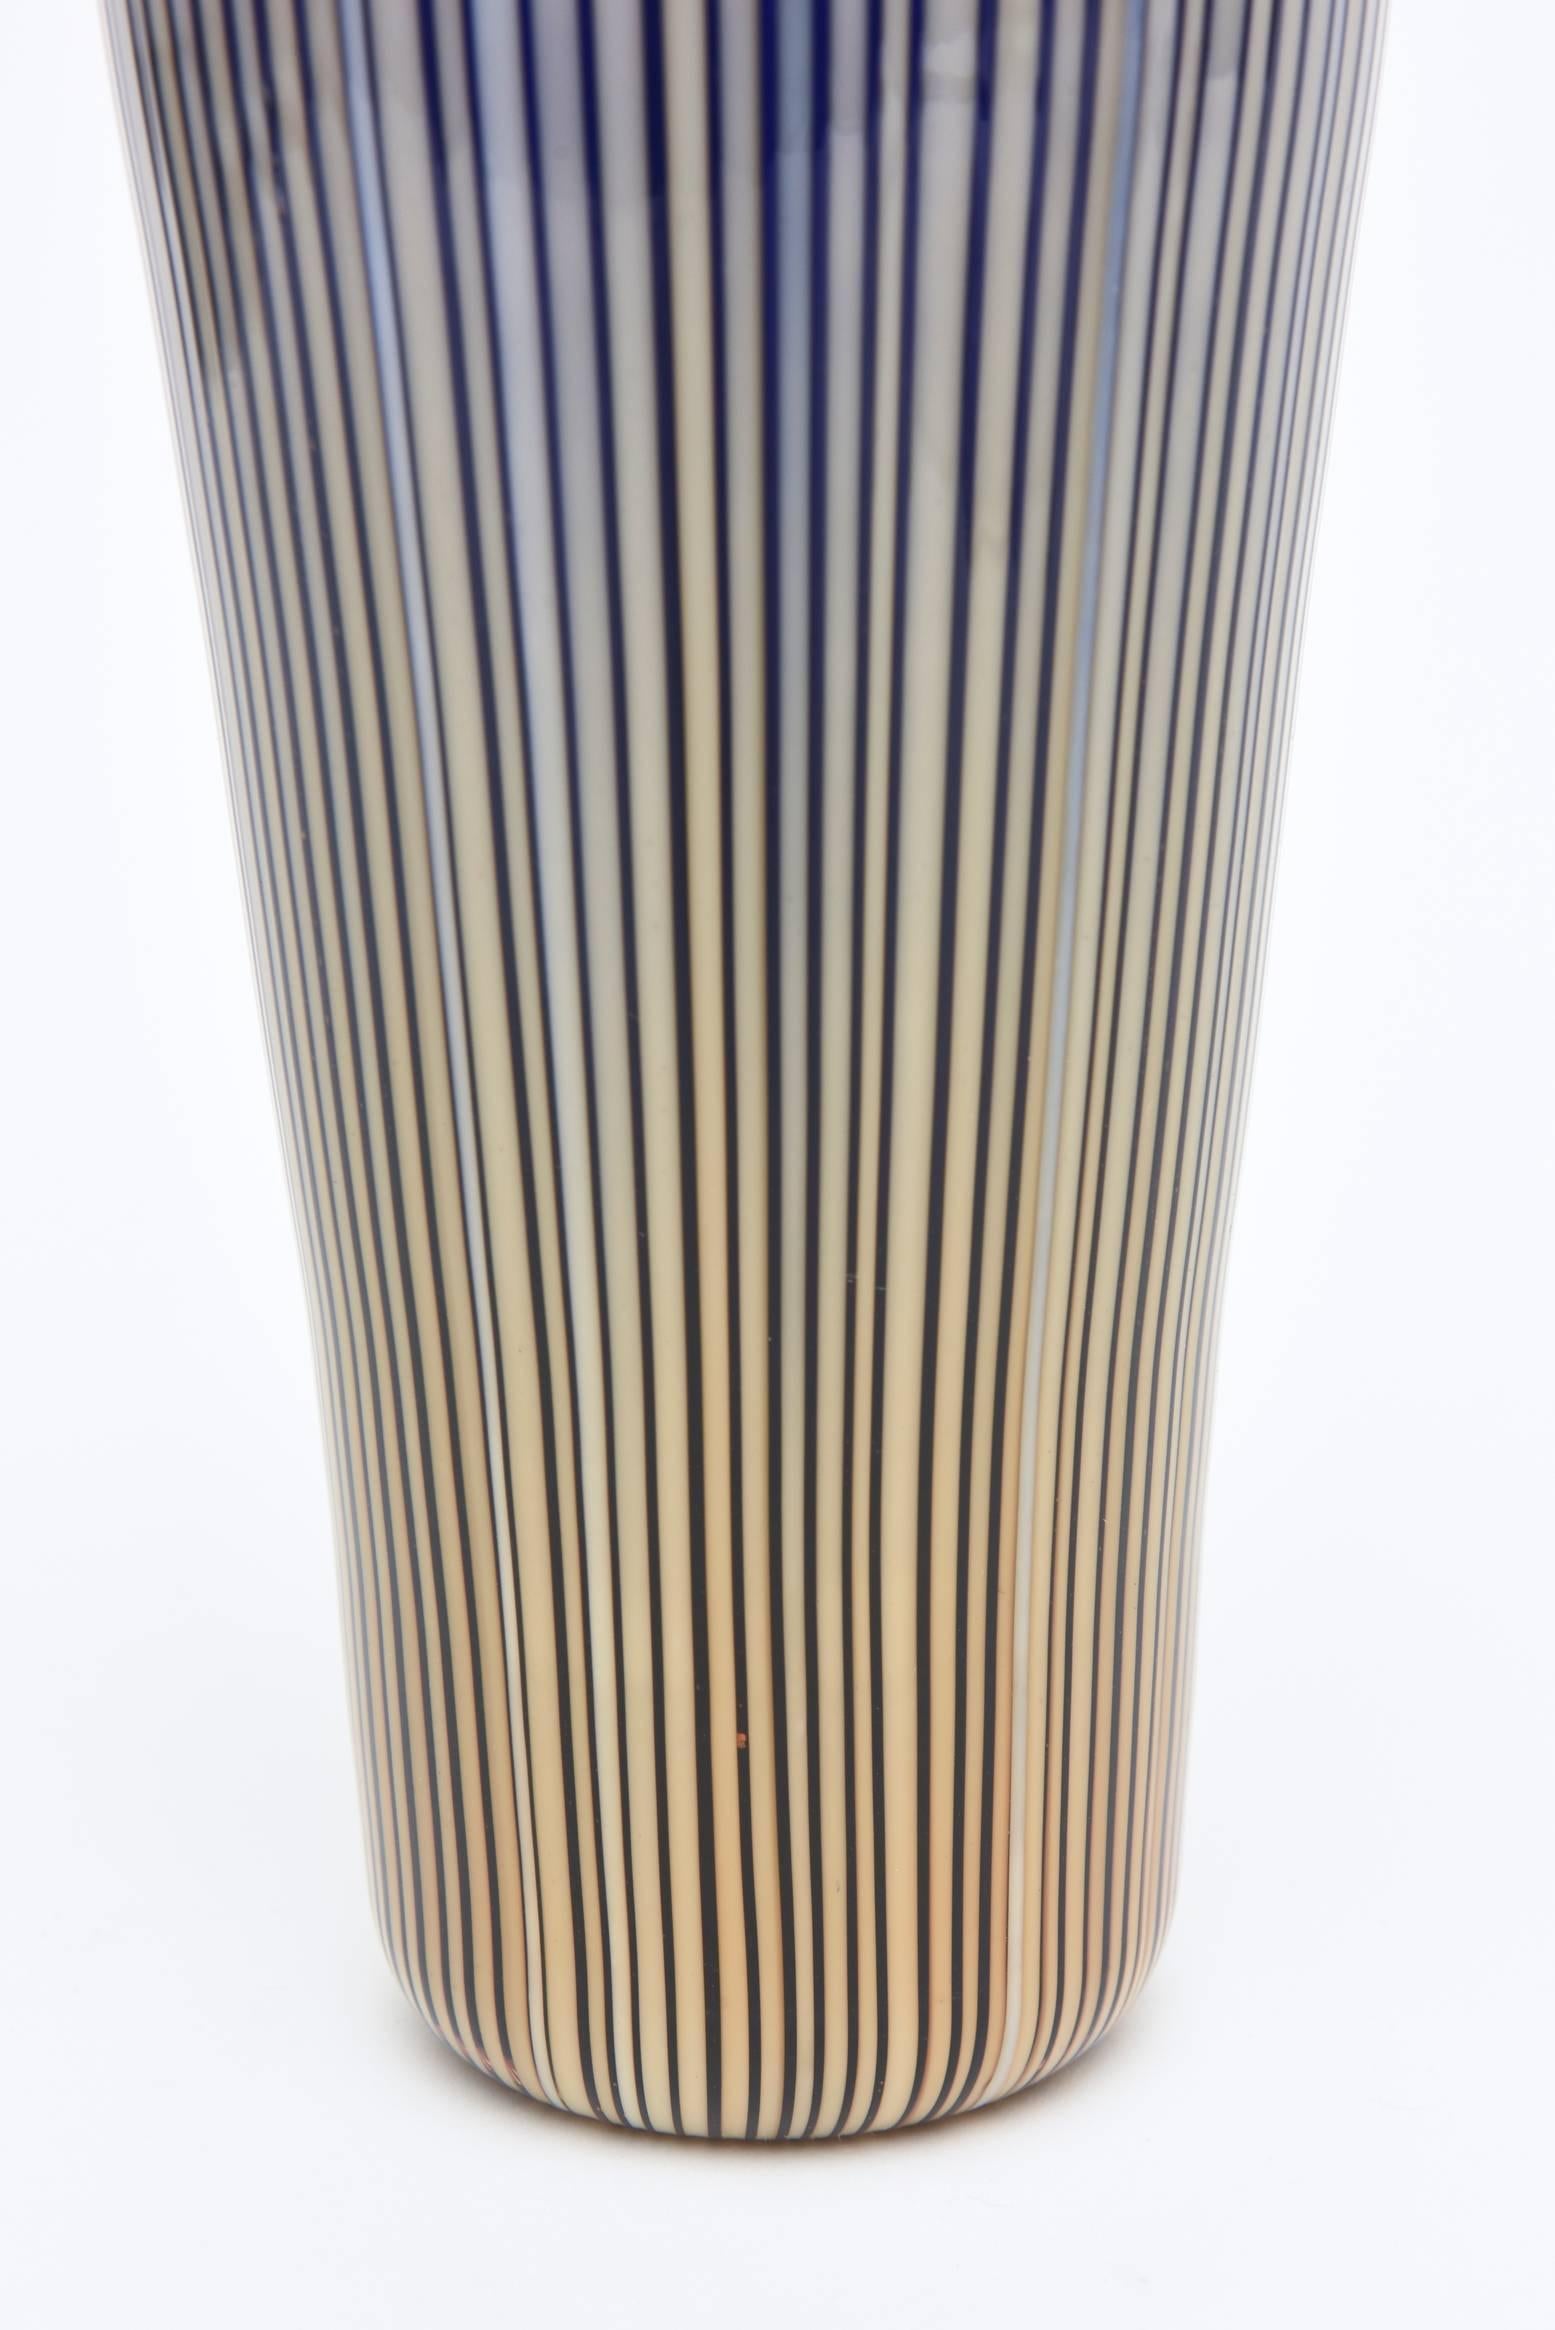 Blown Glass Murano Cenedese Striped Bottle, Vessel, Glass Sculpture